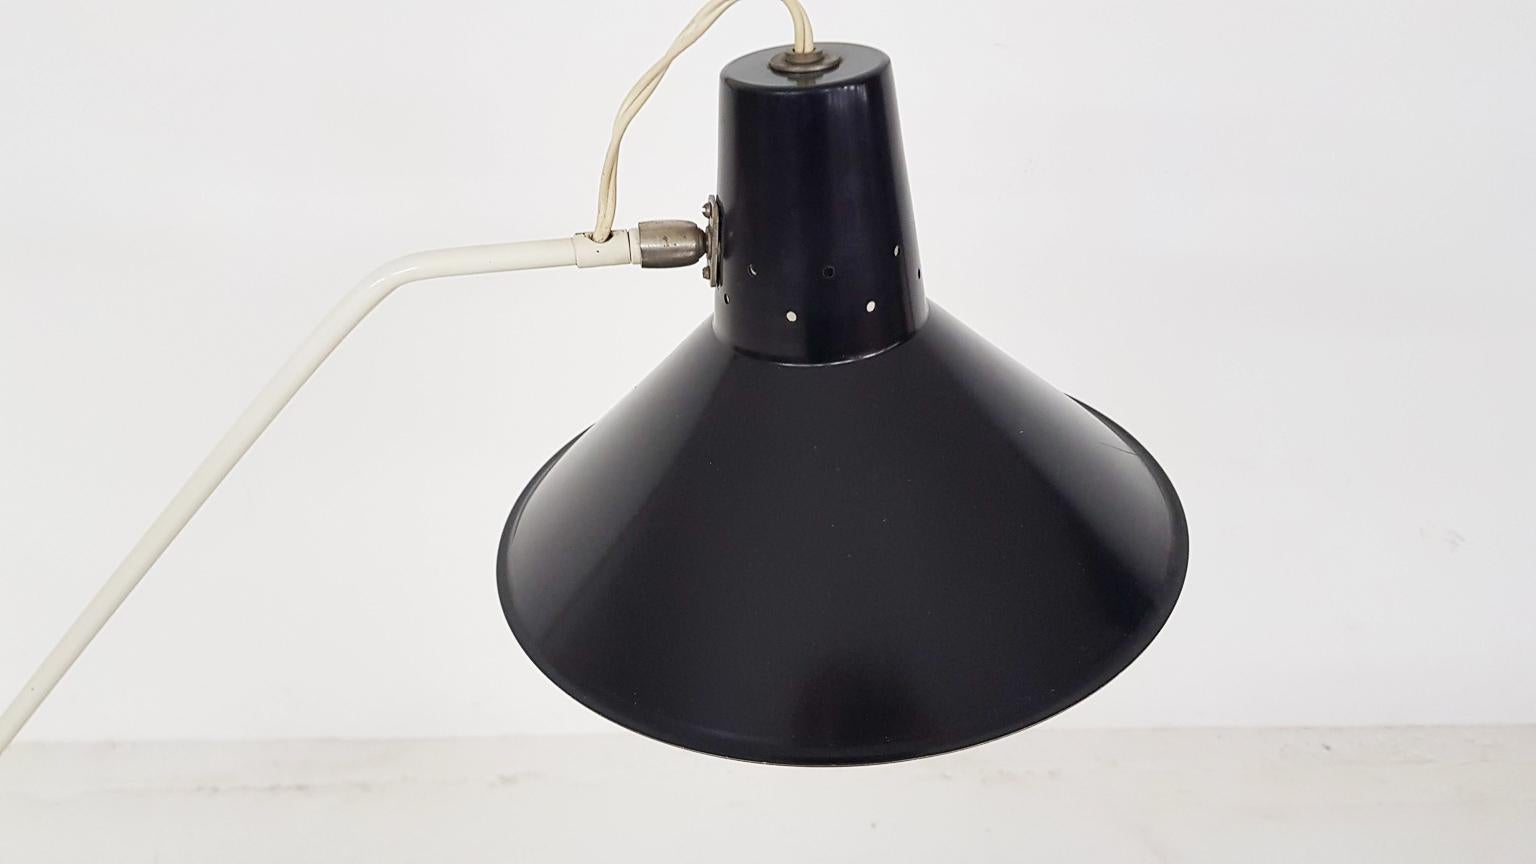 J.J. Hoogervorst for Anvia Almelo Metal Floor Lamp, Dutch Modern Design, 1950s In Good Condition For Sale In Amsterdam, NL